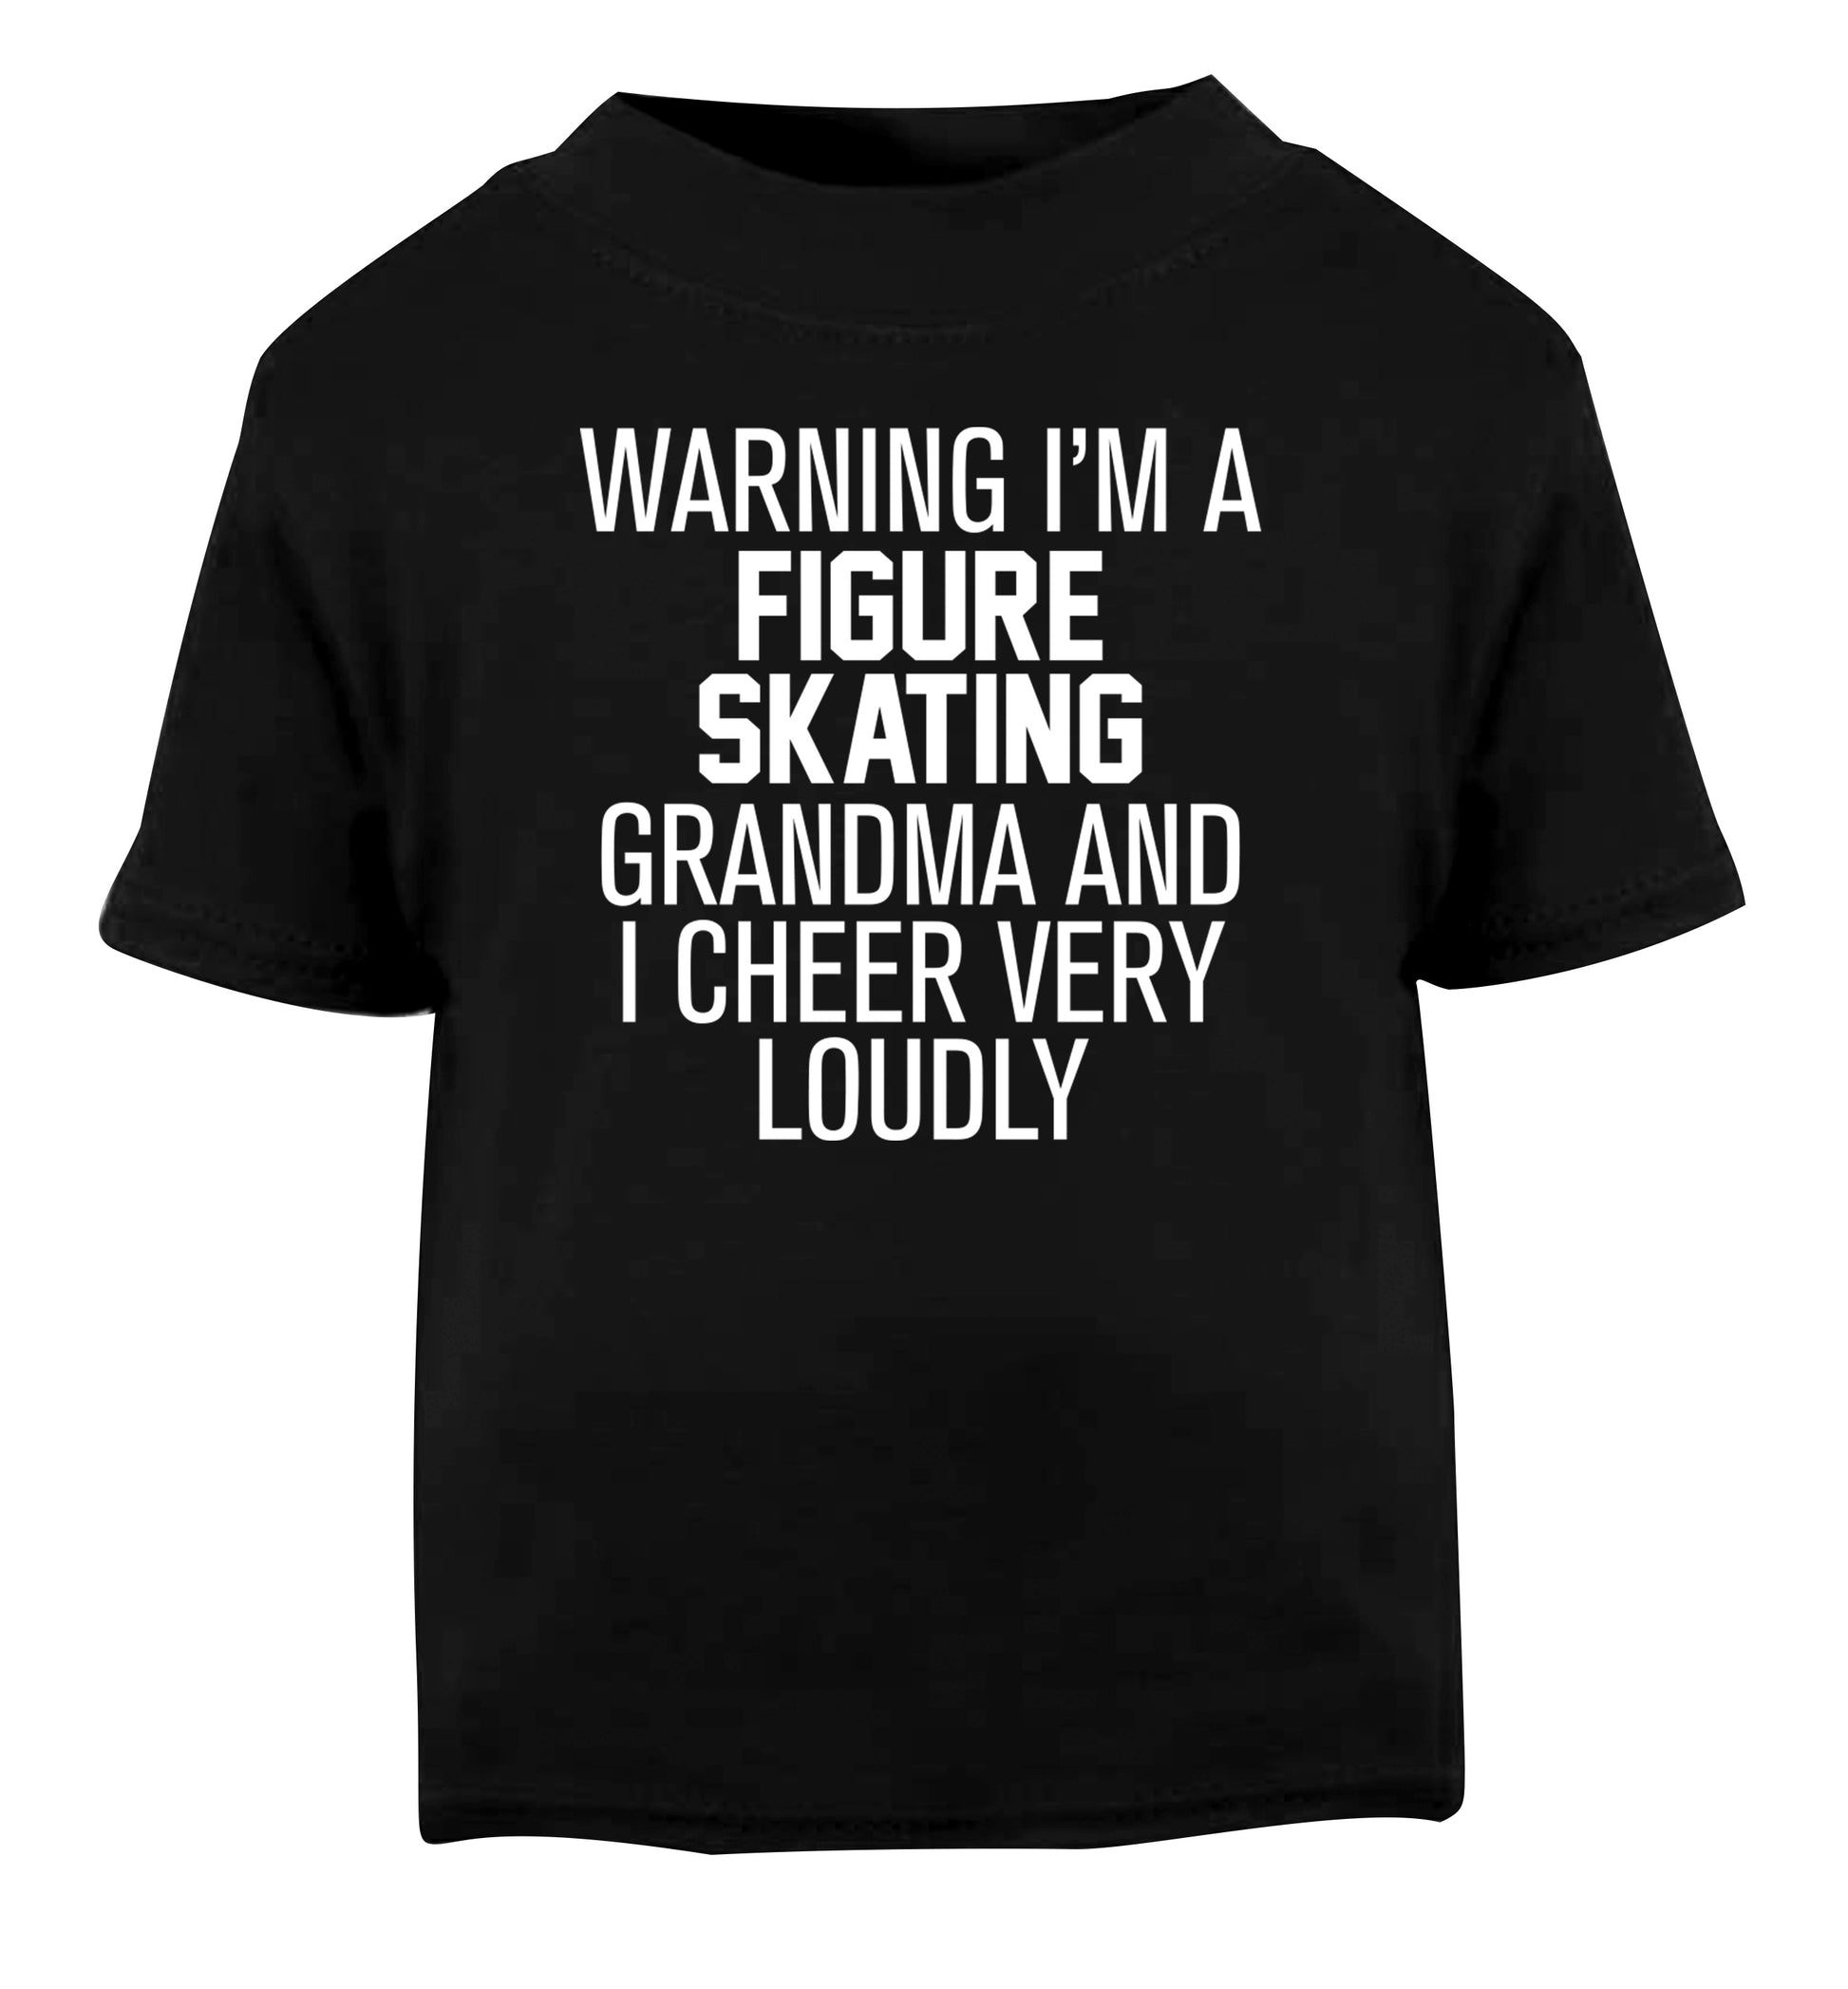 Warning I'm a figure skating grandma and I cheer very loudly Black Baby Toddler Tshirt 2 years